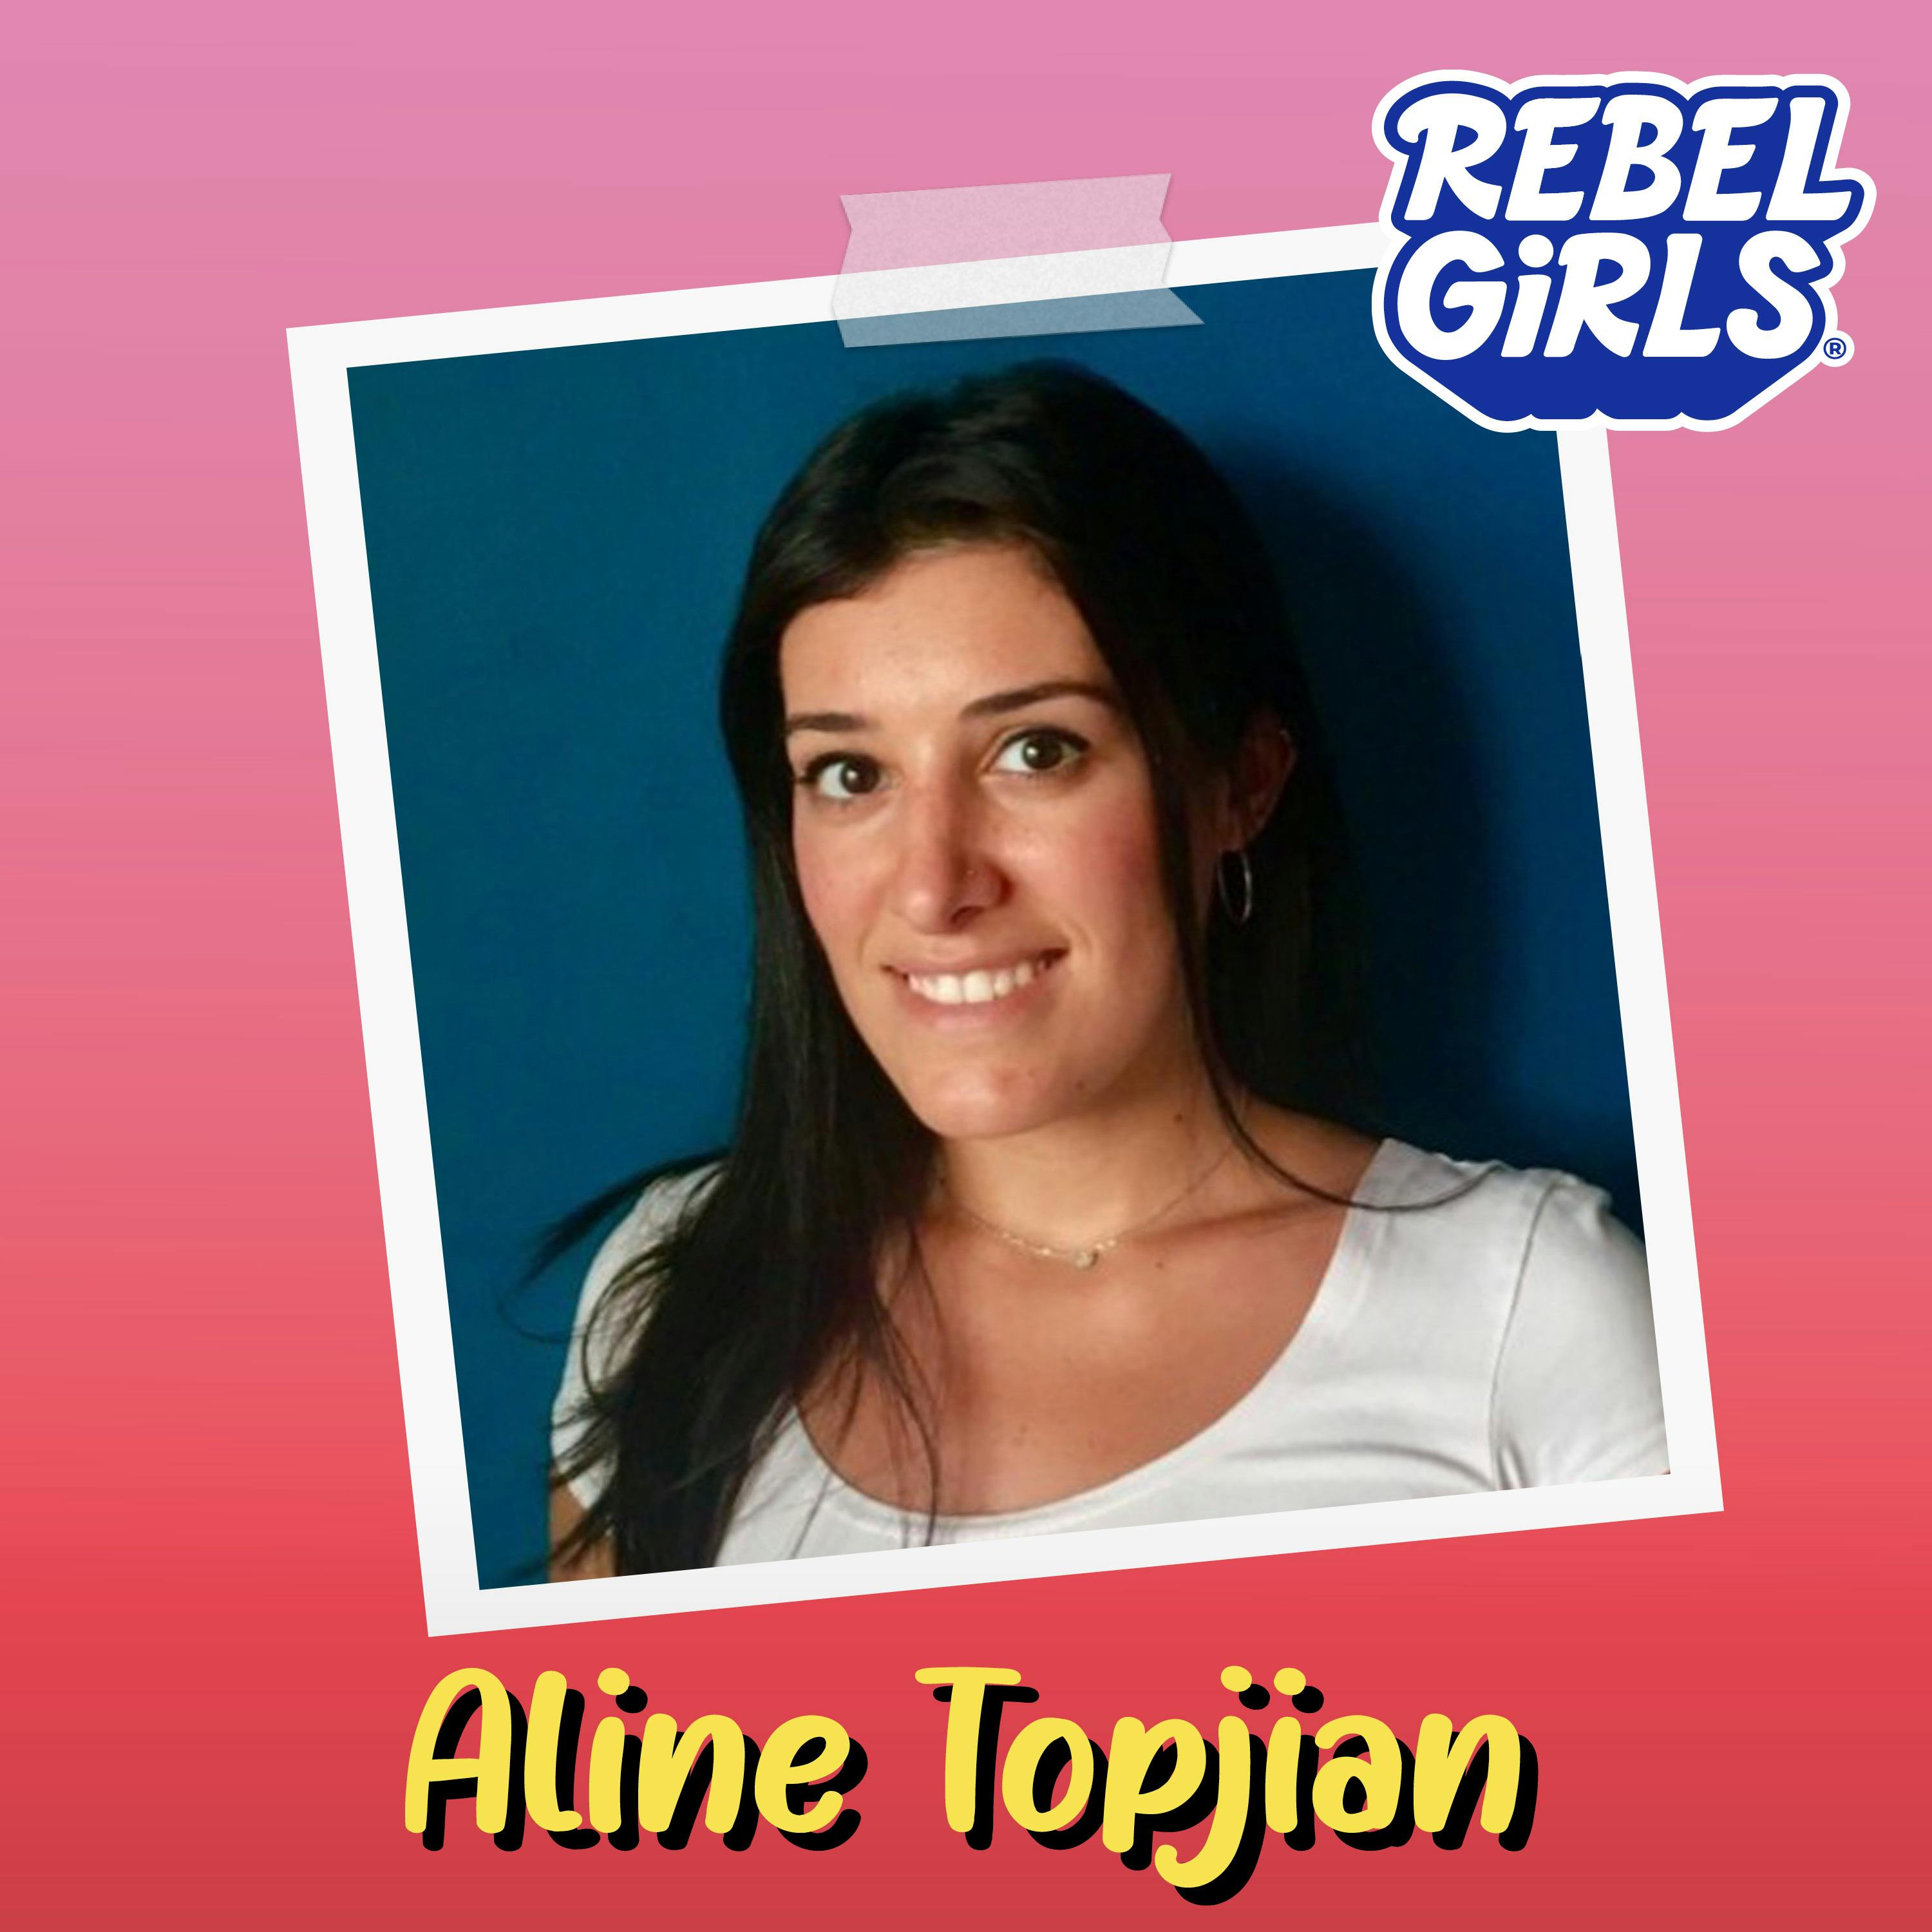 Expert Talk! With Aline Topjian